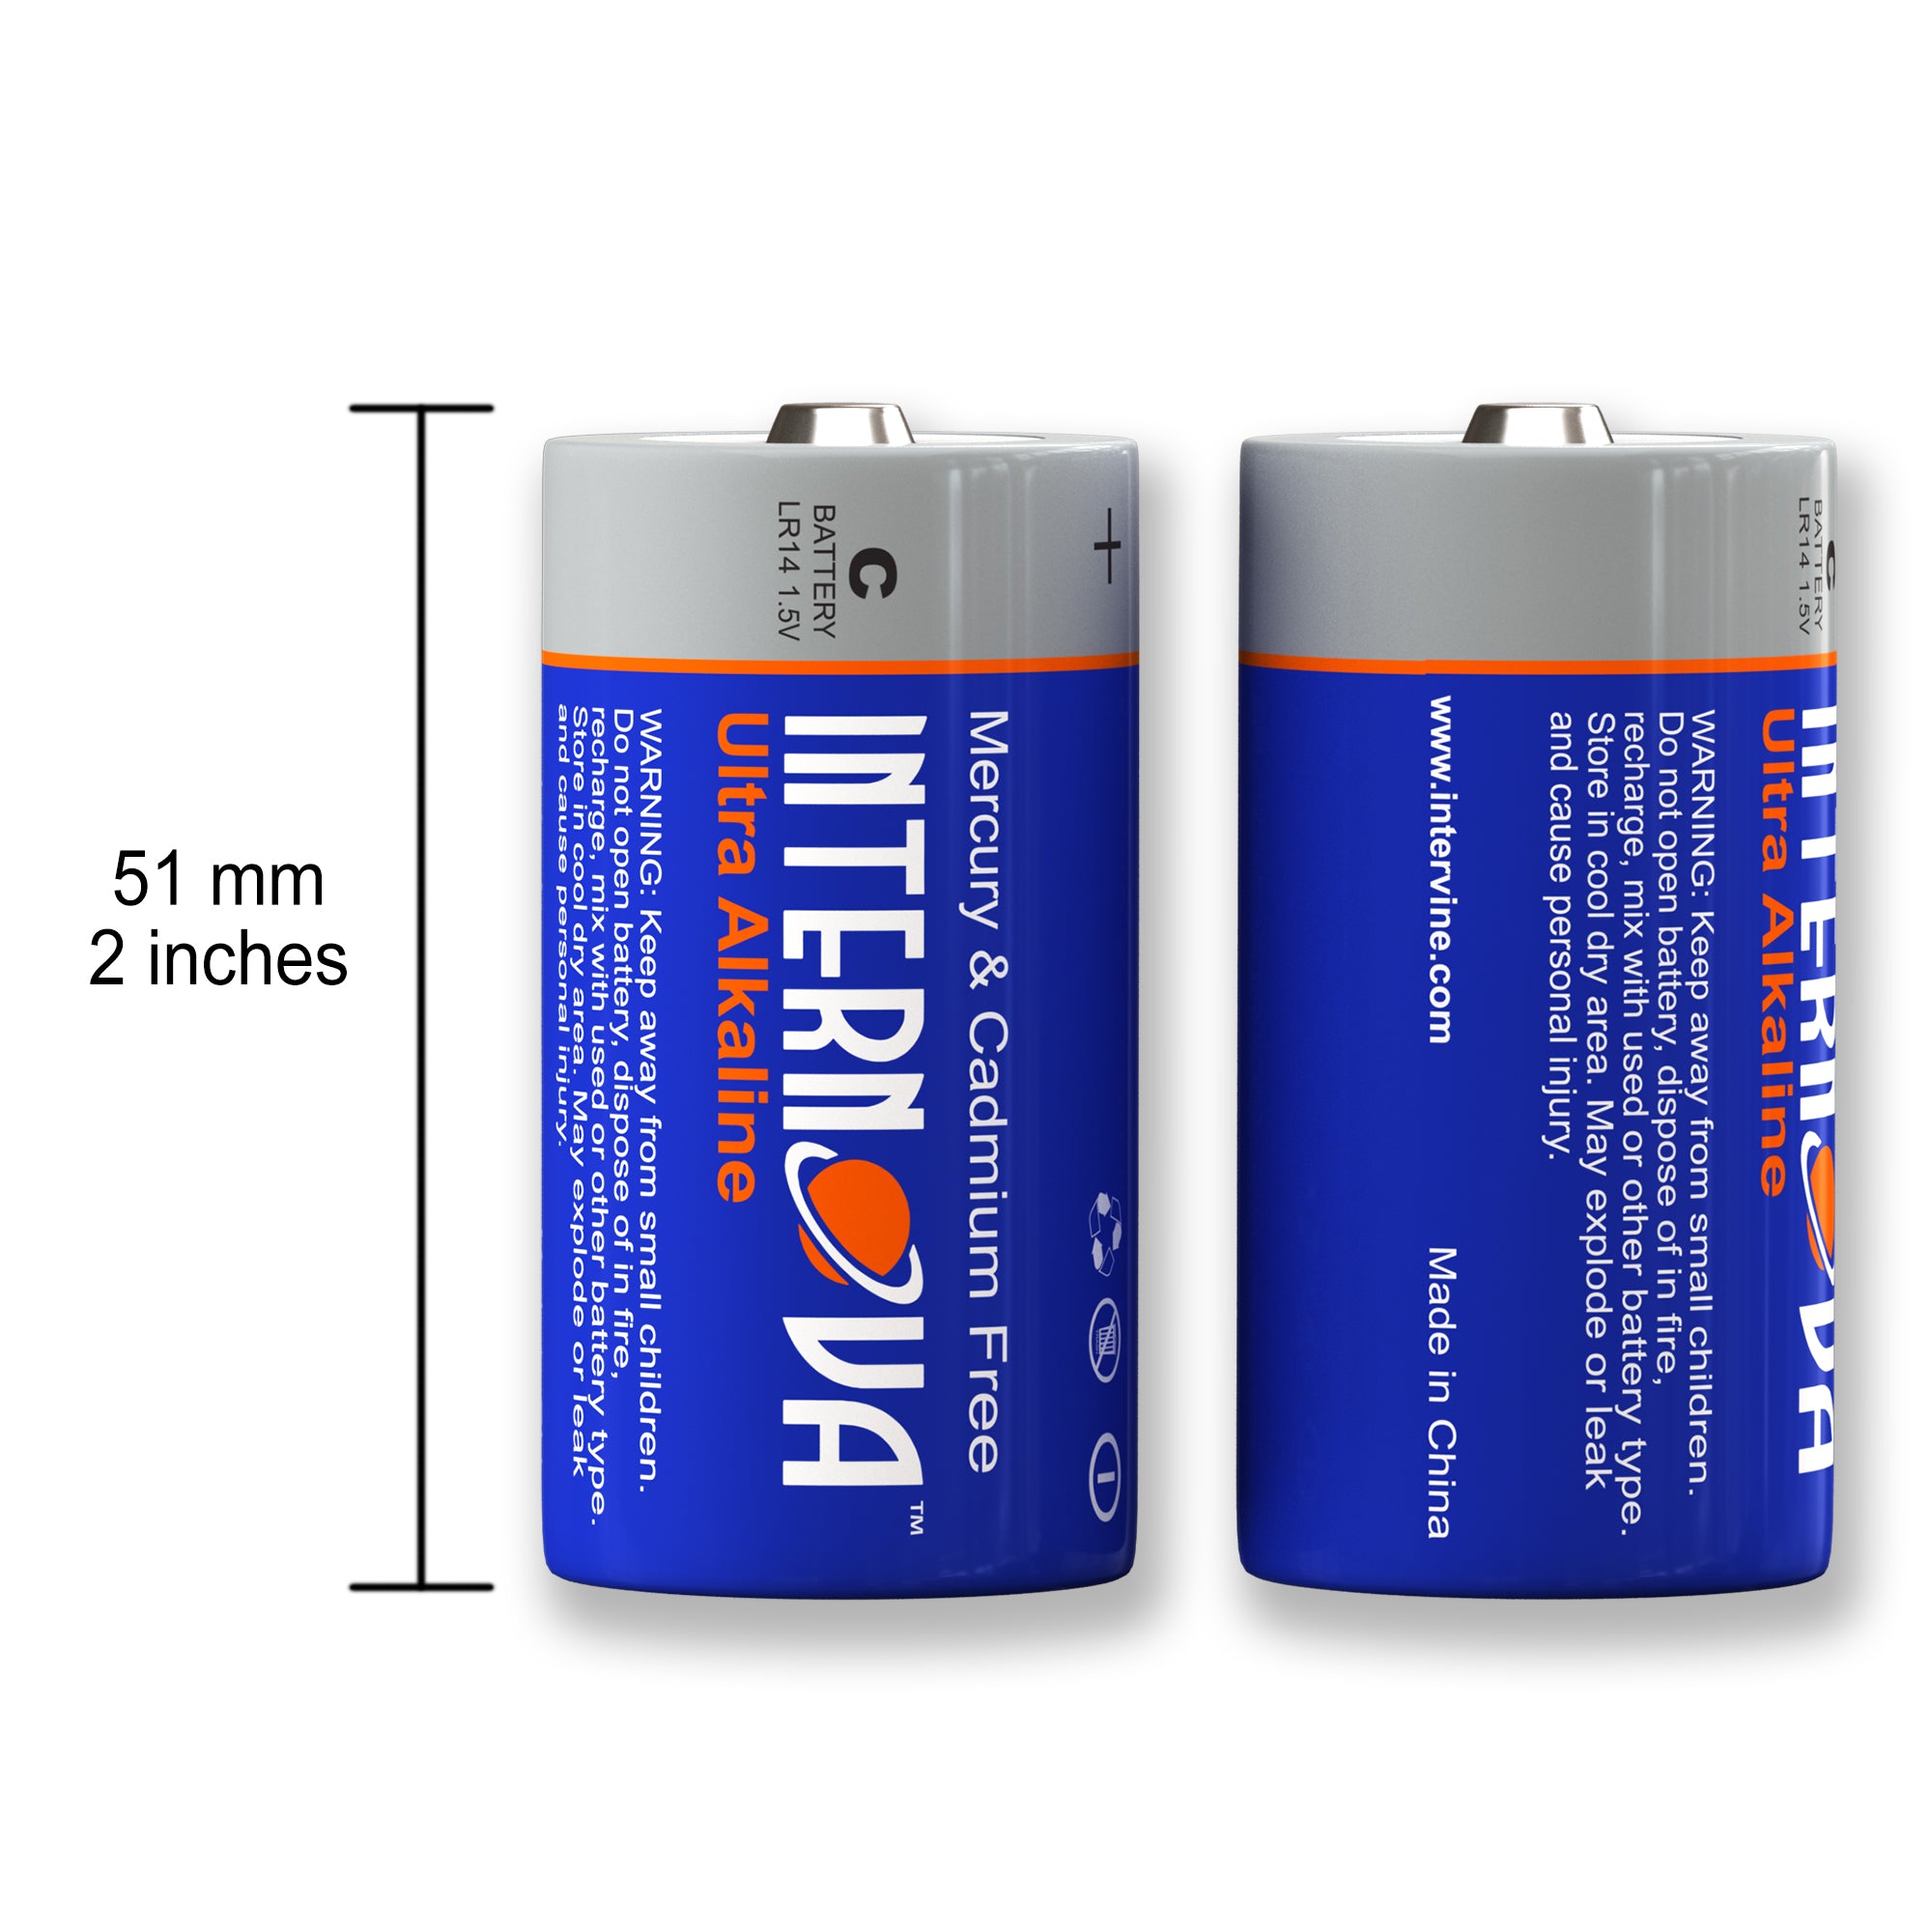 Internova Ultra Alkaline C Batteries, LR14 1.5V Cell High Performance, 12  Pack